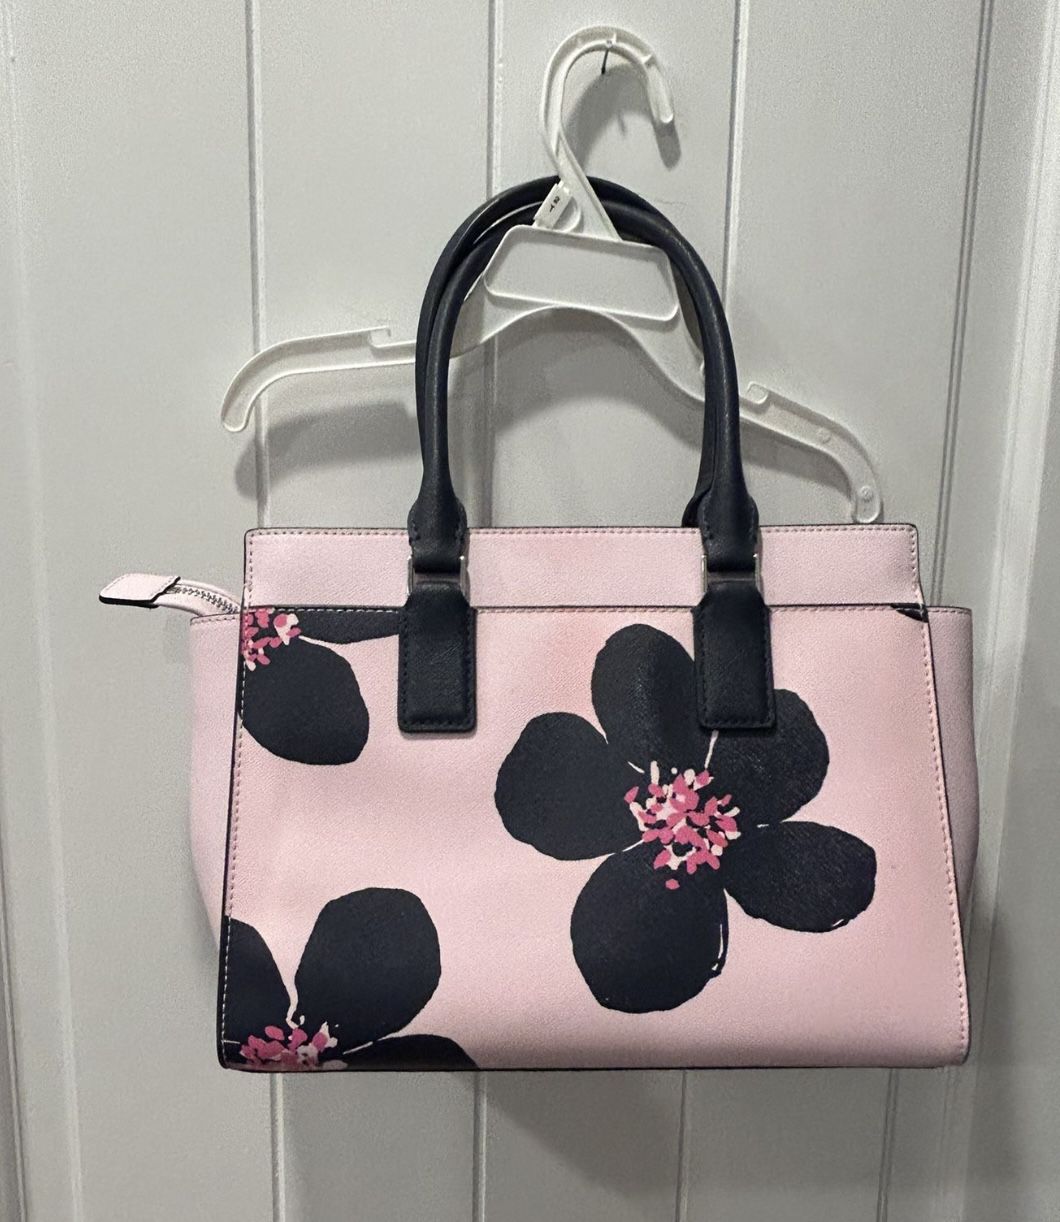 Kate Spade Spring Mother’s Day Handbag Gift 